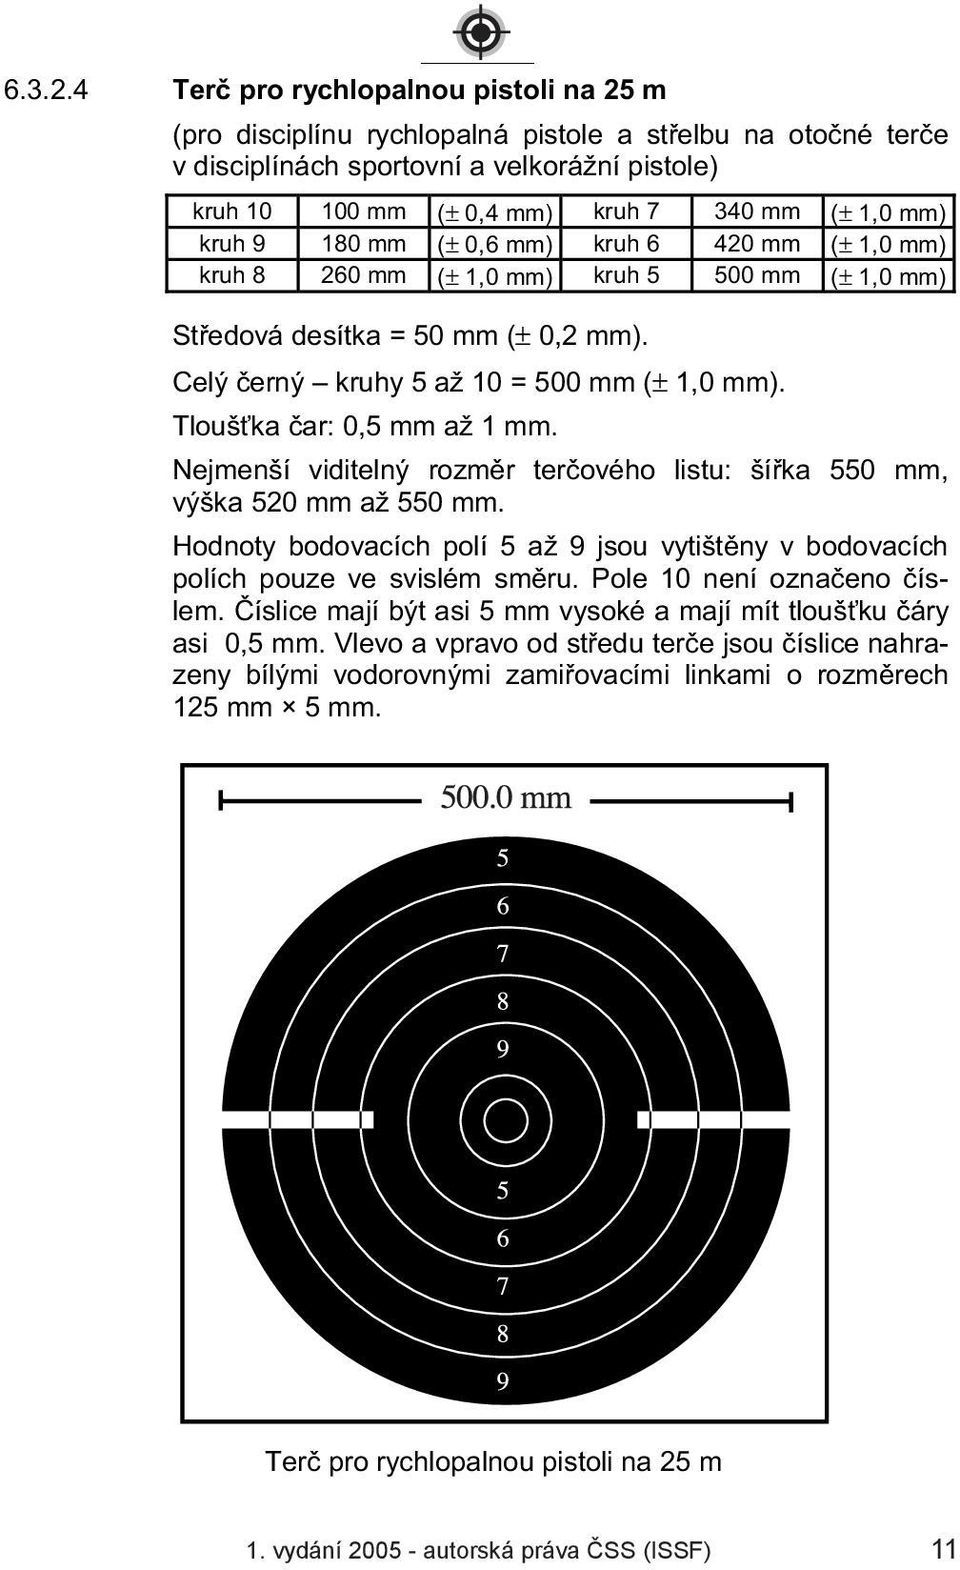 kruh 9 180 mm (± 0,6 mm) kruh 6 420 mm (± 1,0 mm) kruh 8 260 mm (± 1,0 mm) kruh 5 500 mm (± 1,0 mm) St edová desítka = 50 mm (± 0,2 mm). Celý erný kruhy 5 až 10 = 500 mm (± 1,0 mm).